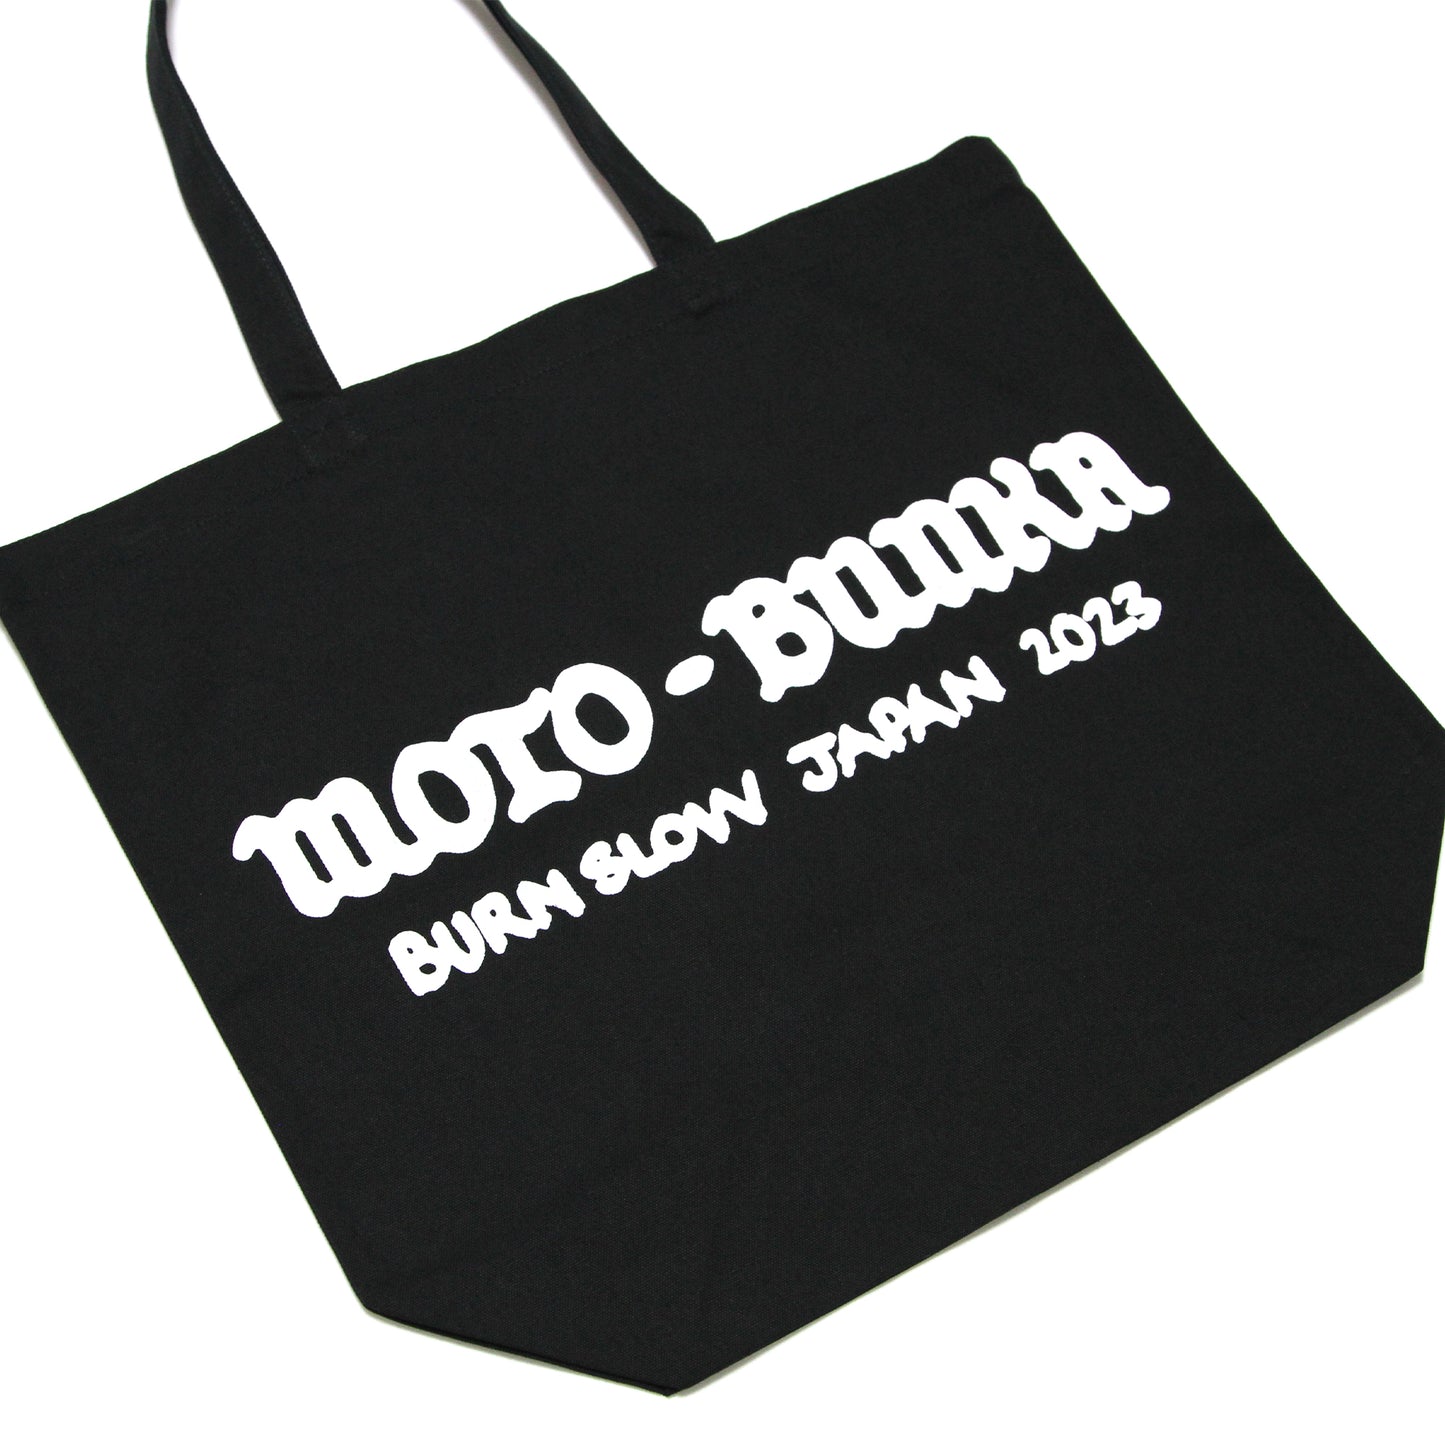 MOTO-BUNKA X BURN SLOW - Collab Text Logo Tote Bag/Black